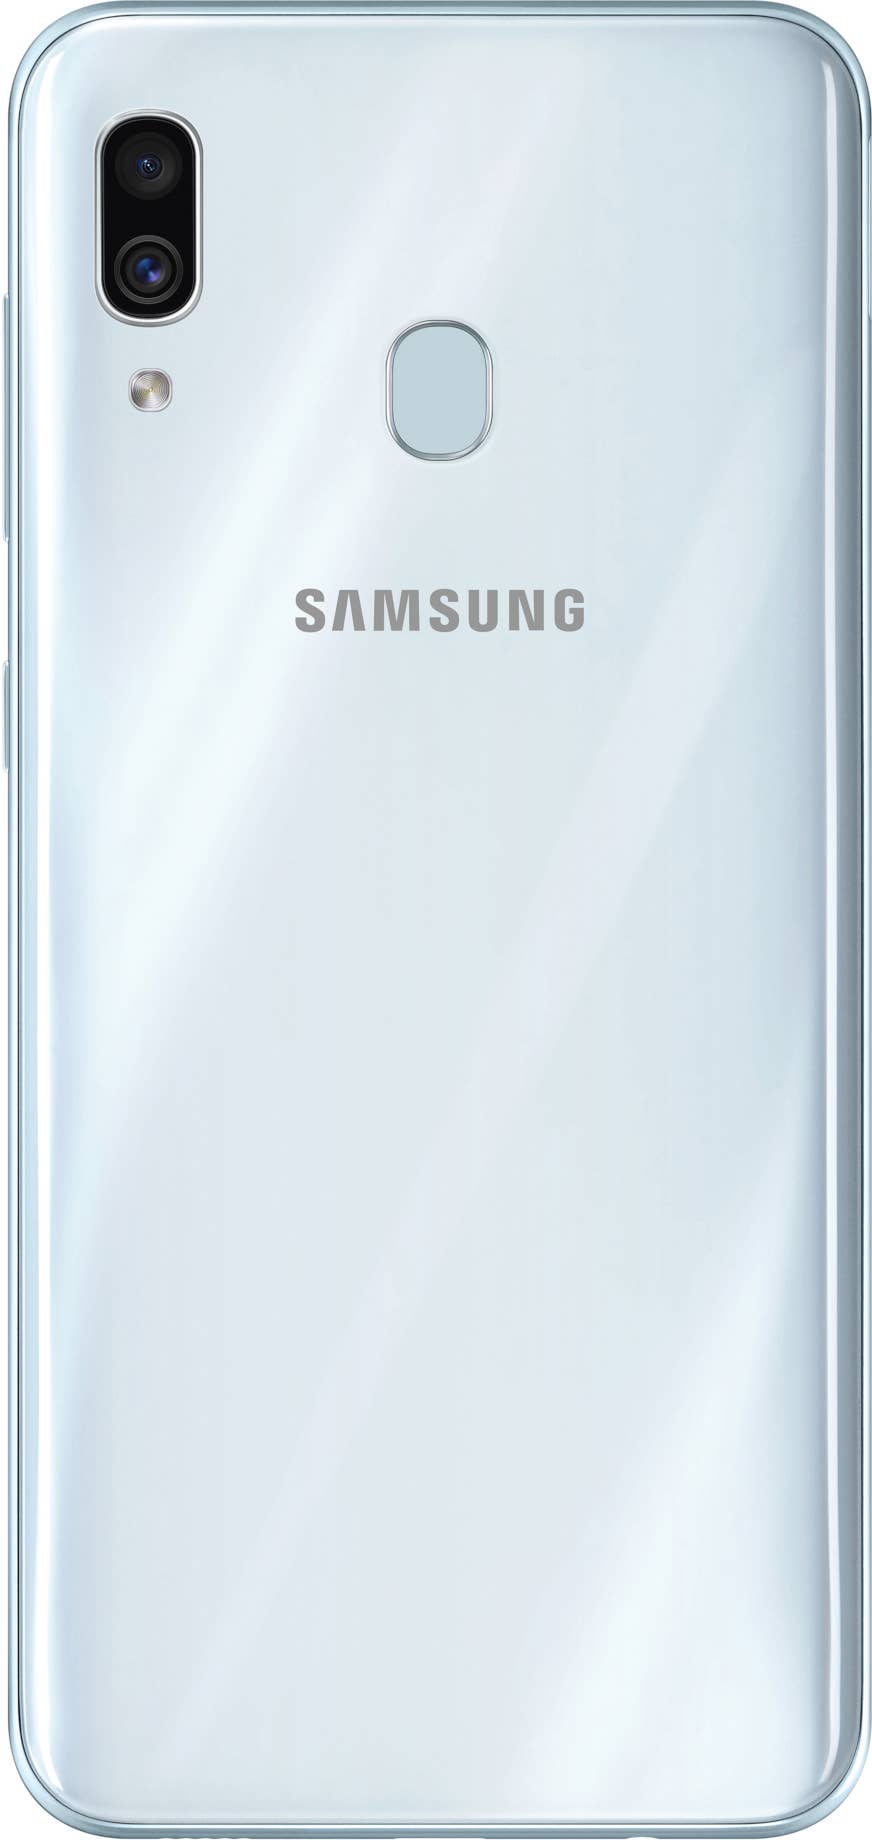 Das Smartphone Samsung Galaxy A30